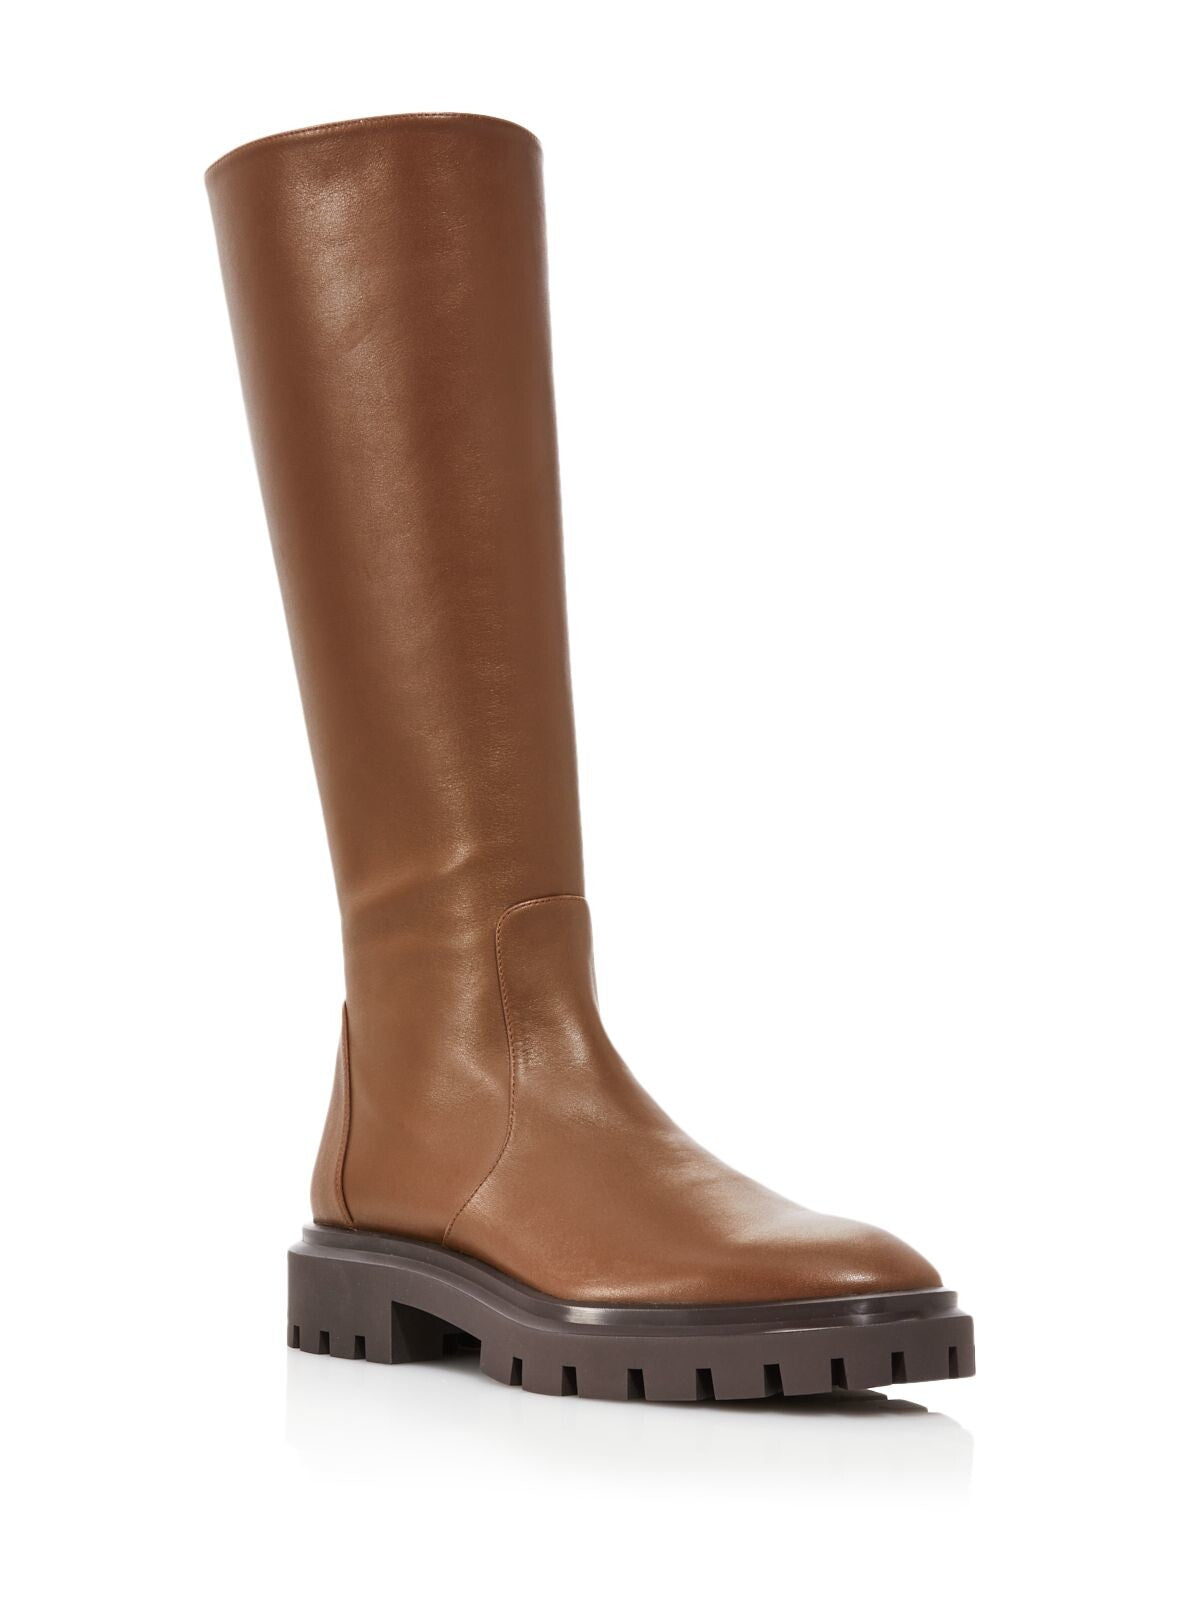 STUART WEITZMAN Womens Brown 1" Platform Lug Sole Padded Ultra Round Toe Block Heel Zip-Up Leather Boots Shoes 5.5 M